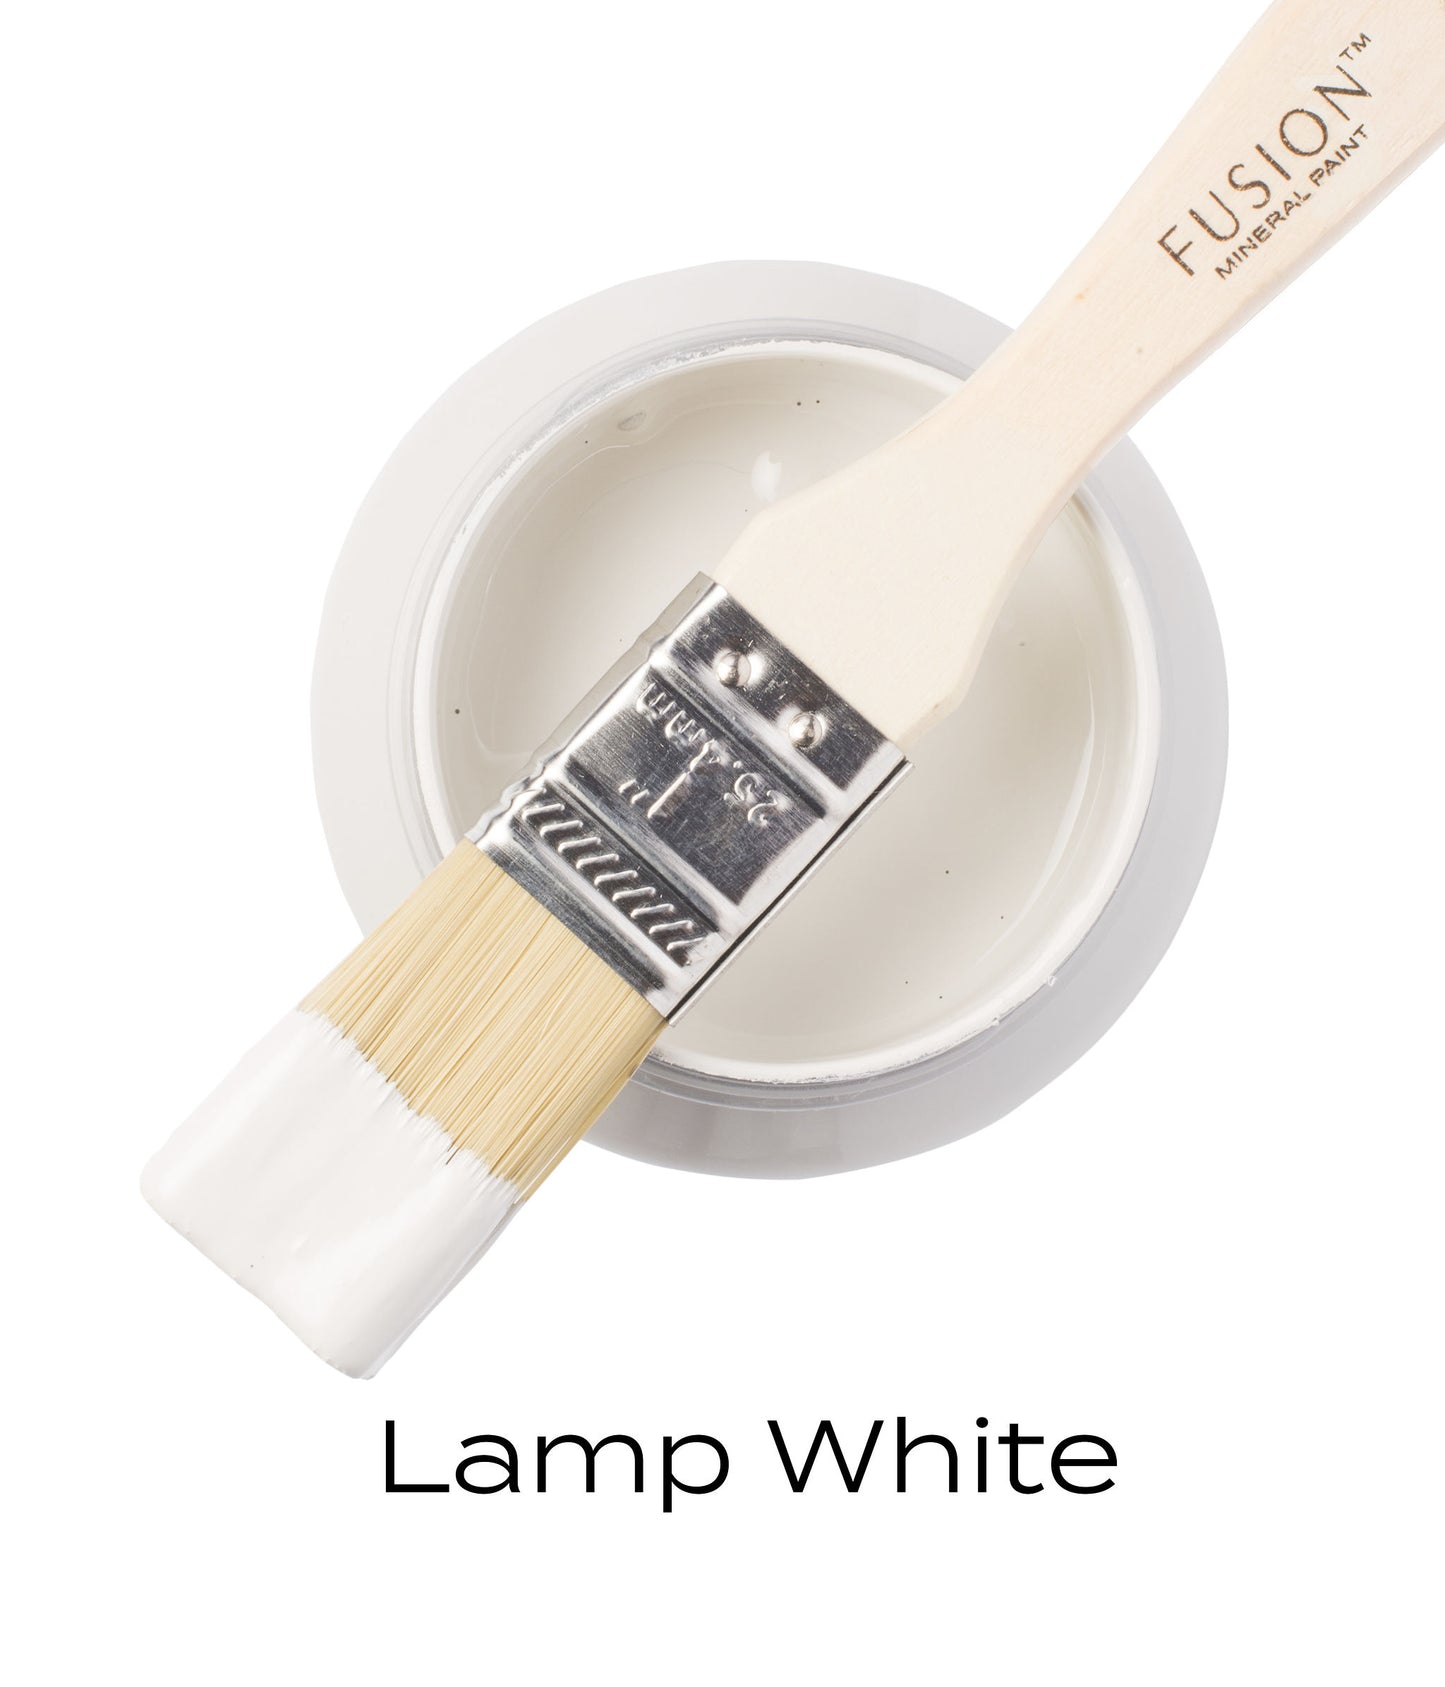 Lamp White.